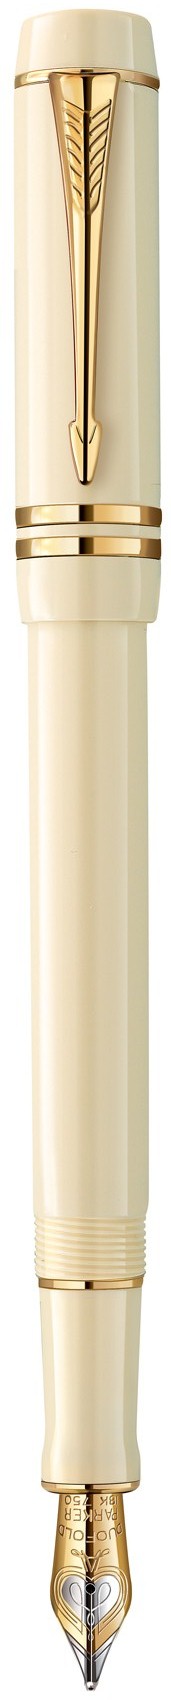 Bút máy Parker Duofold 14 International Ivory cài vàng